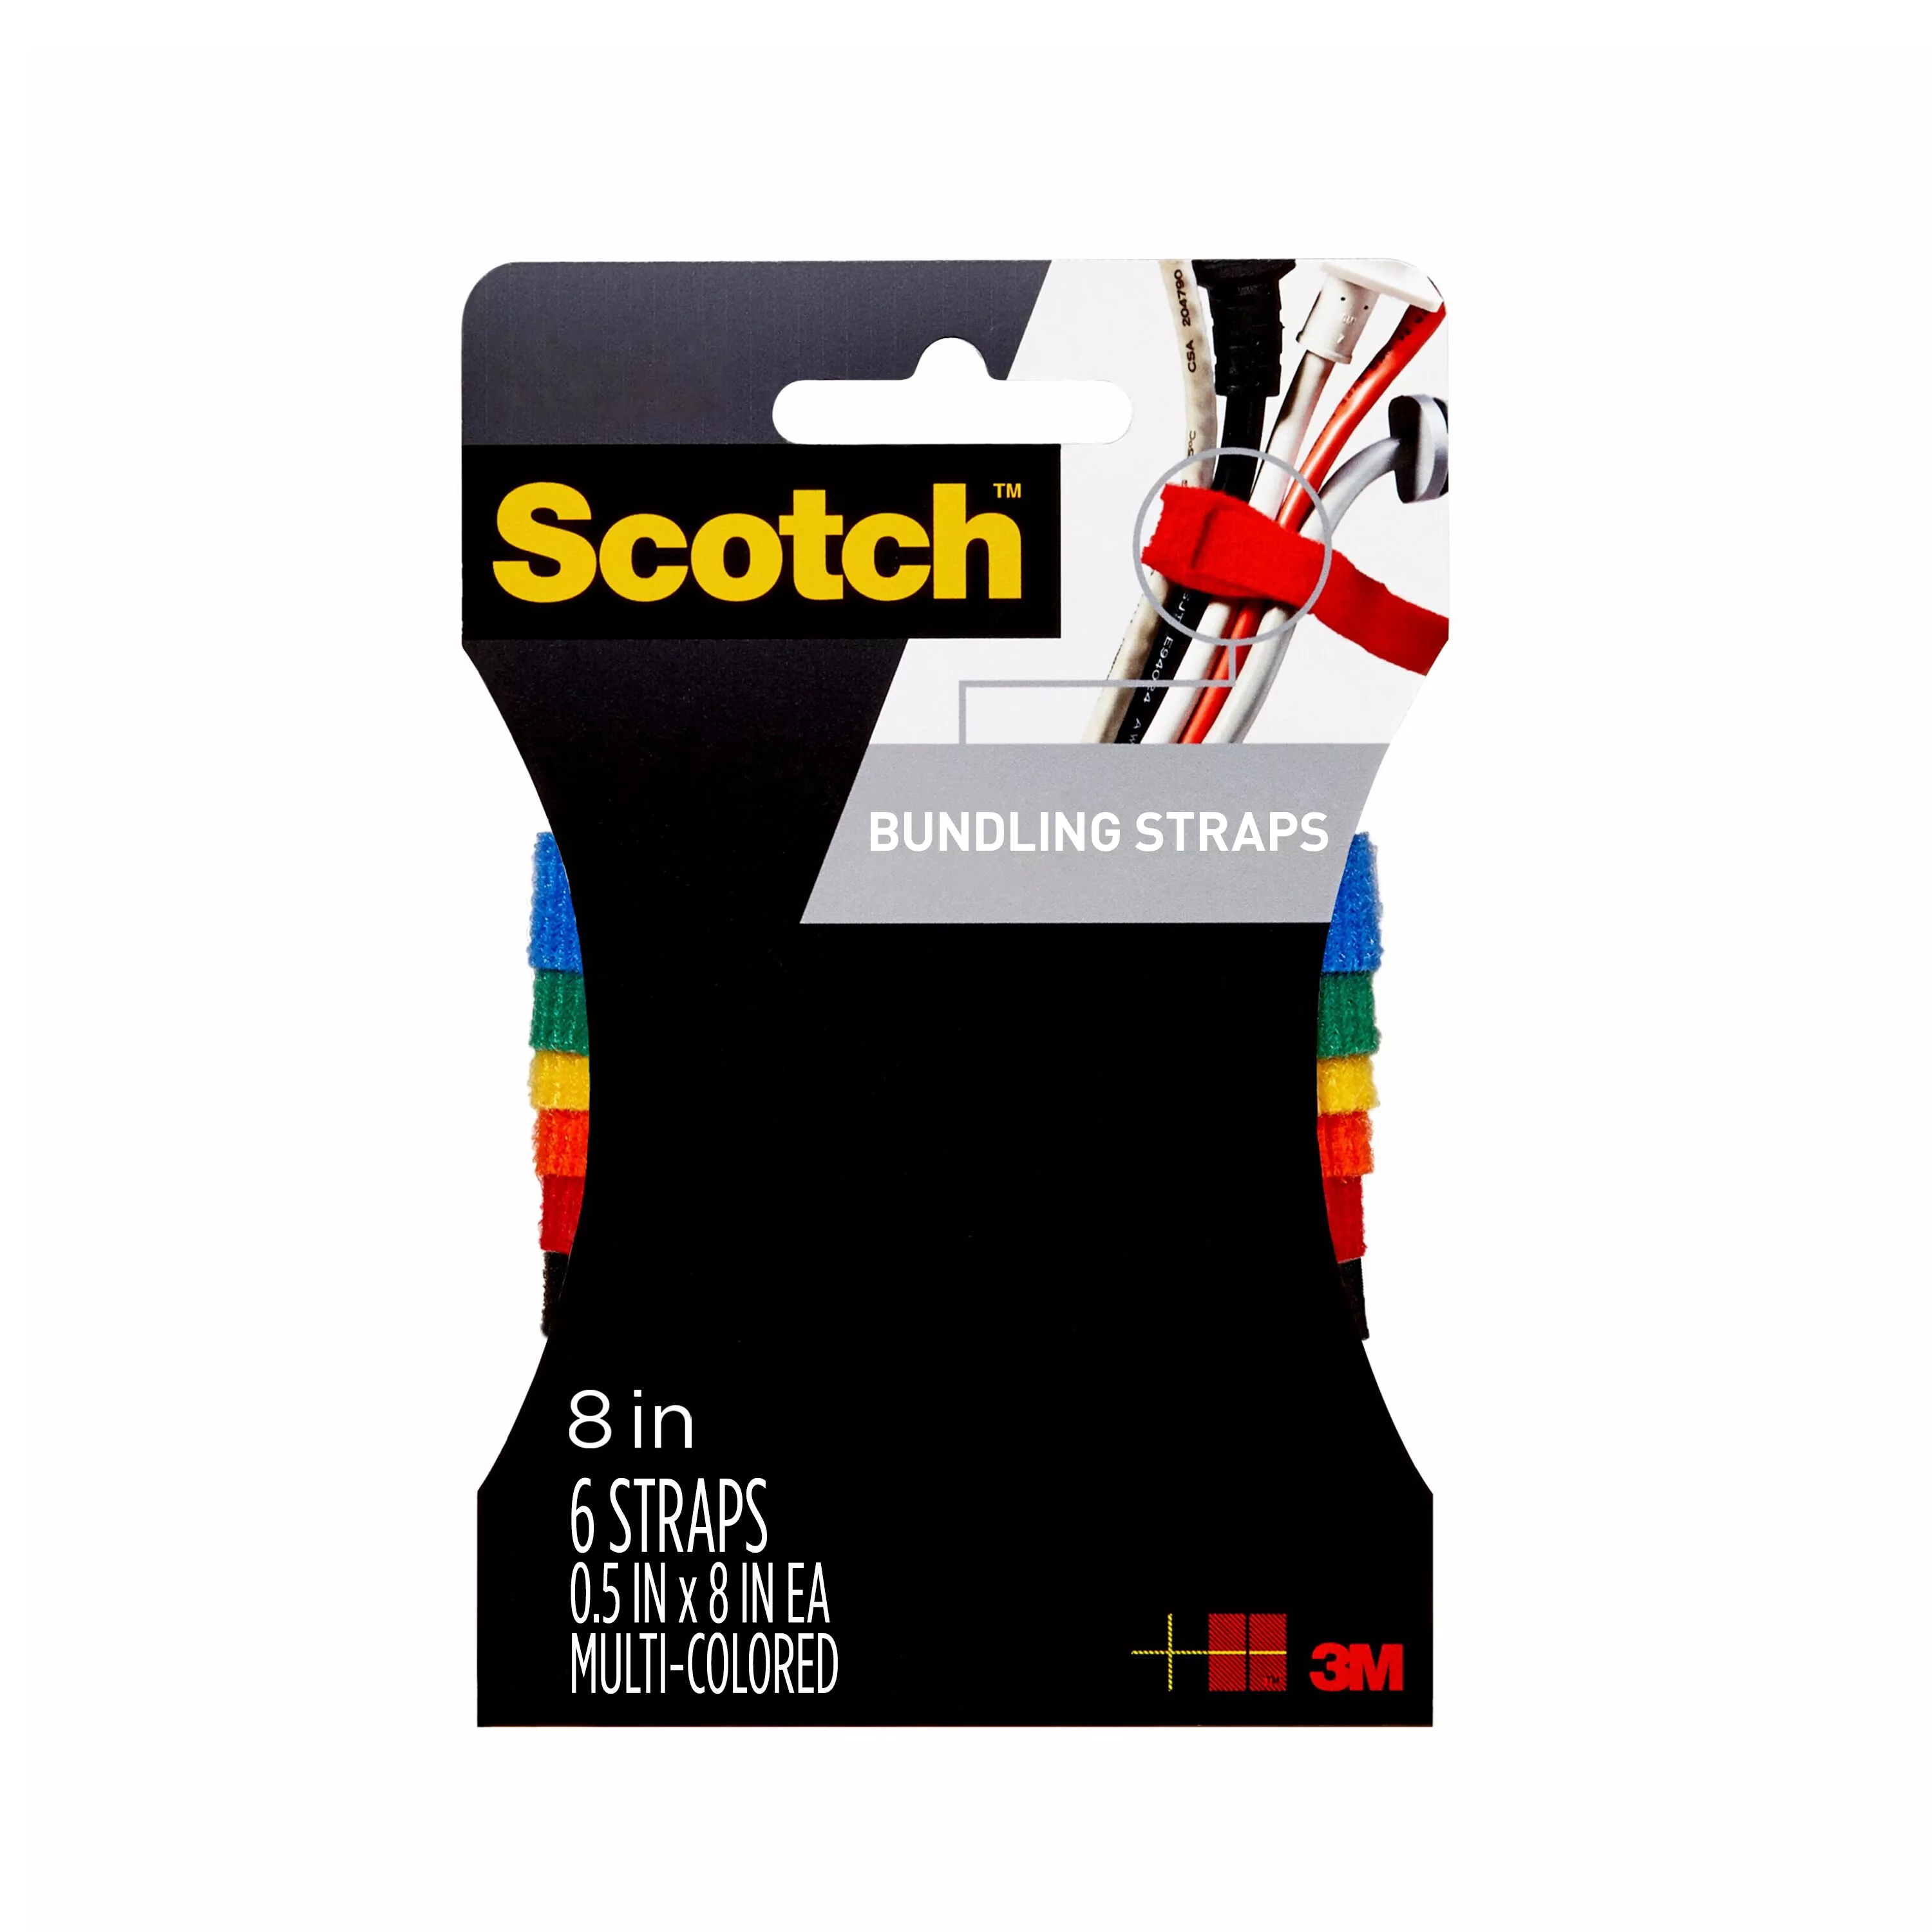 Scotch™ Bundling Strap RF3730, .5 in x 8 in (12,7 mm x 20.3 cm)
Multi-Color